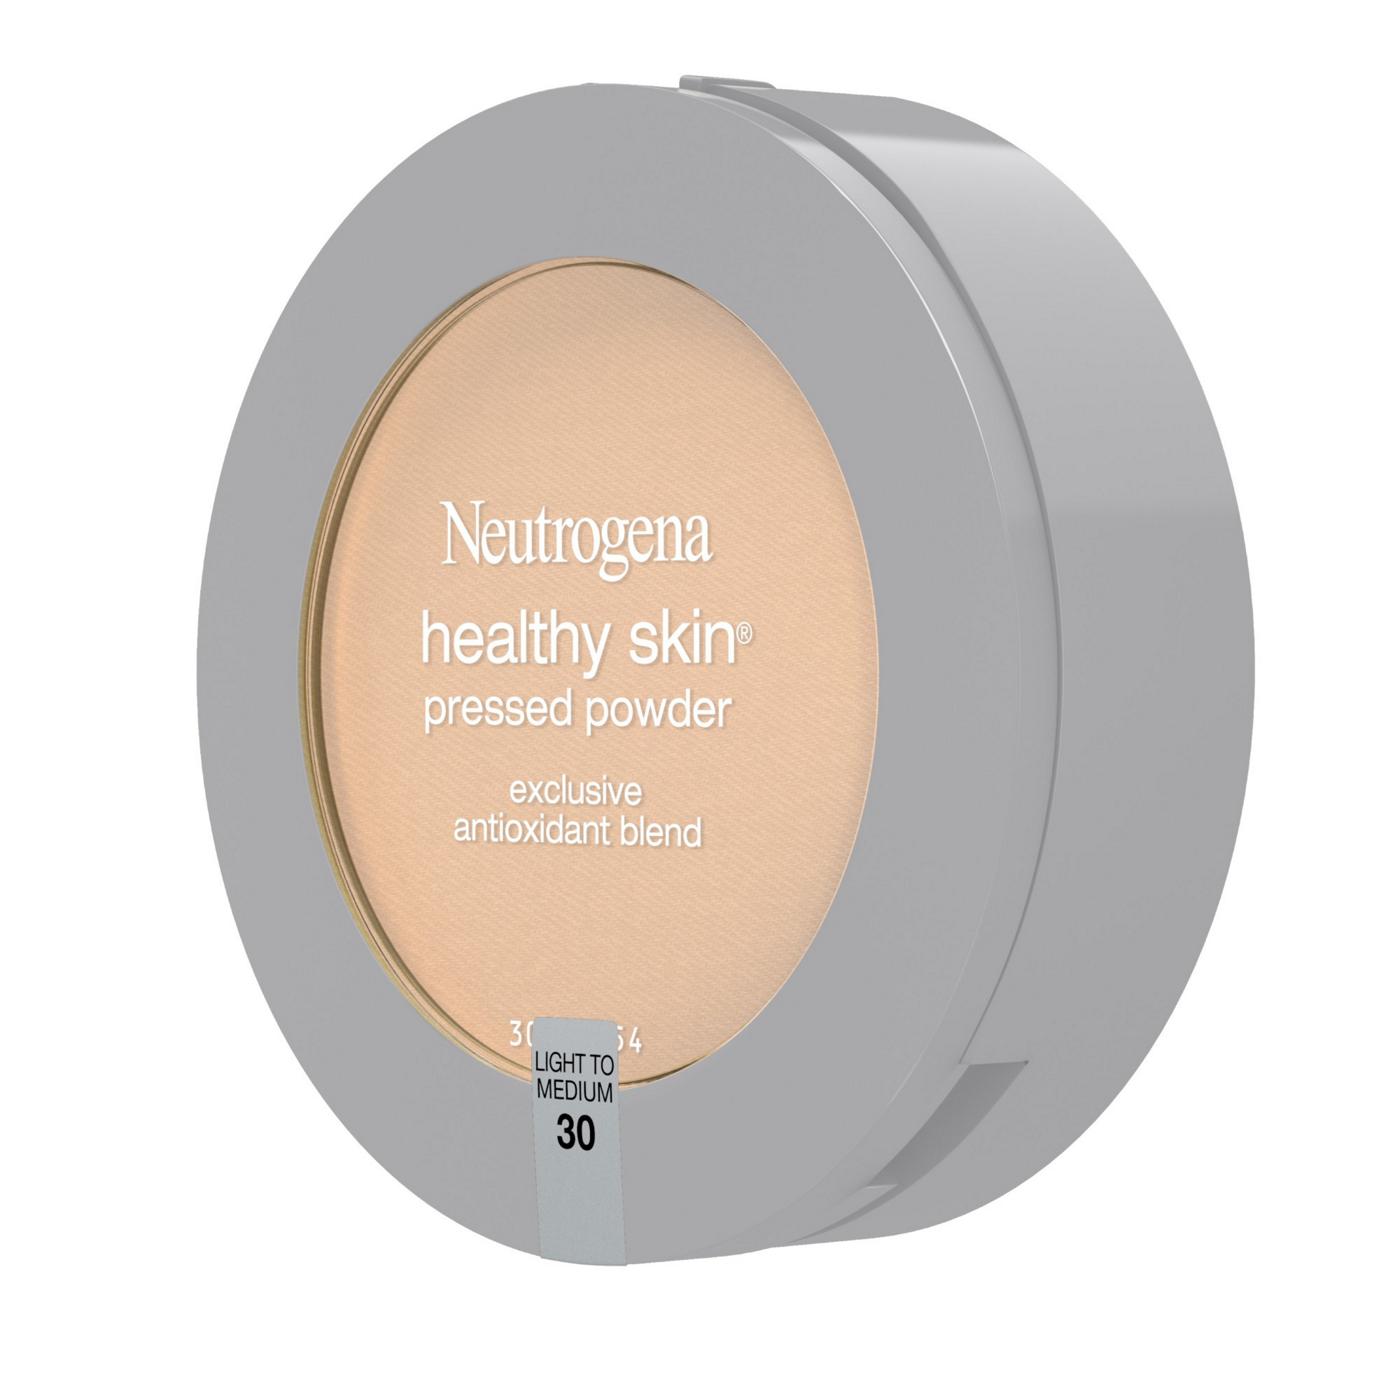 Neutrogena Healthy Skin Pressed Powder 30 Light To Medium; image 2 of 5